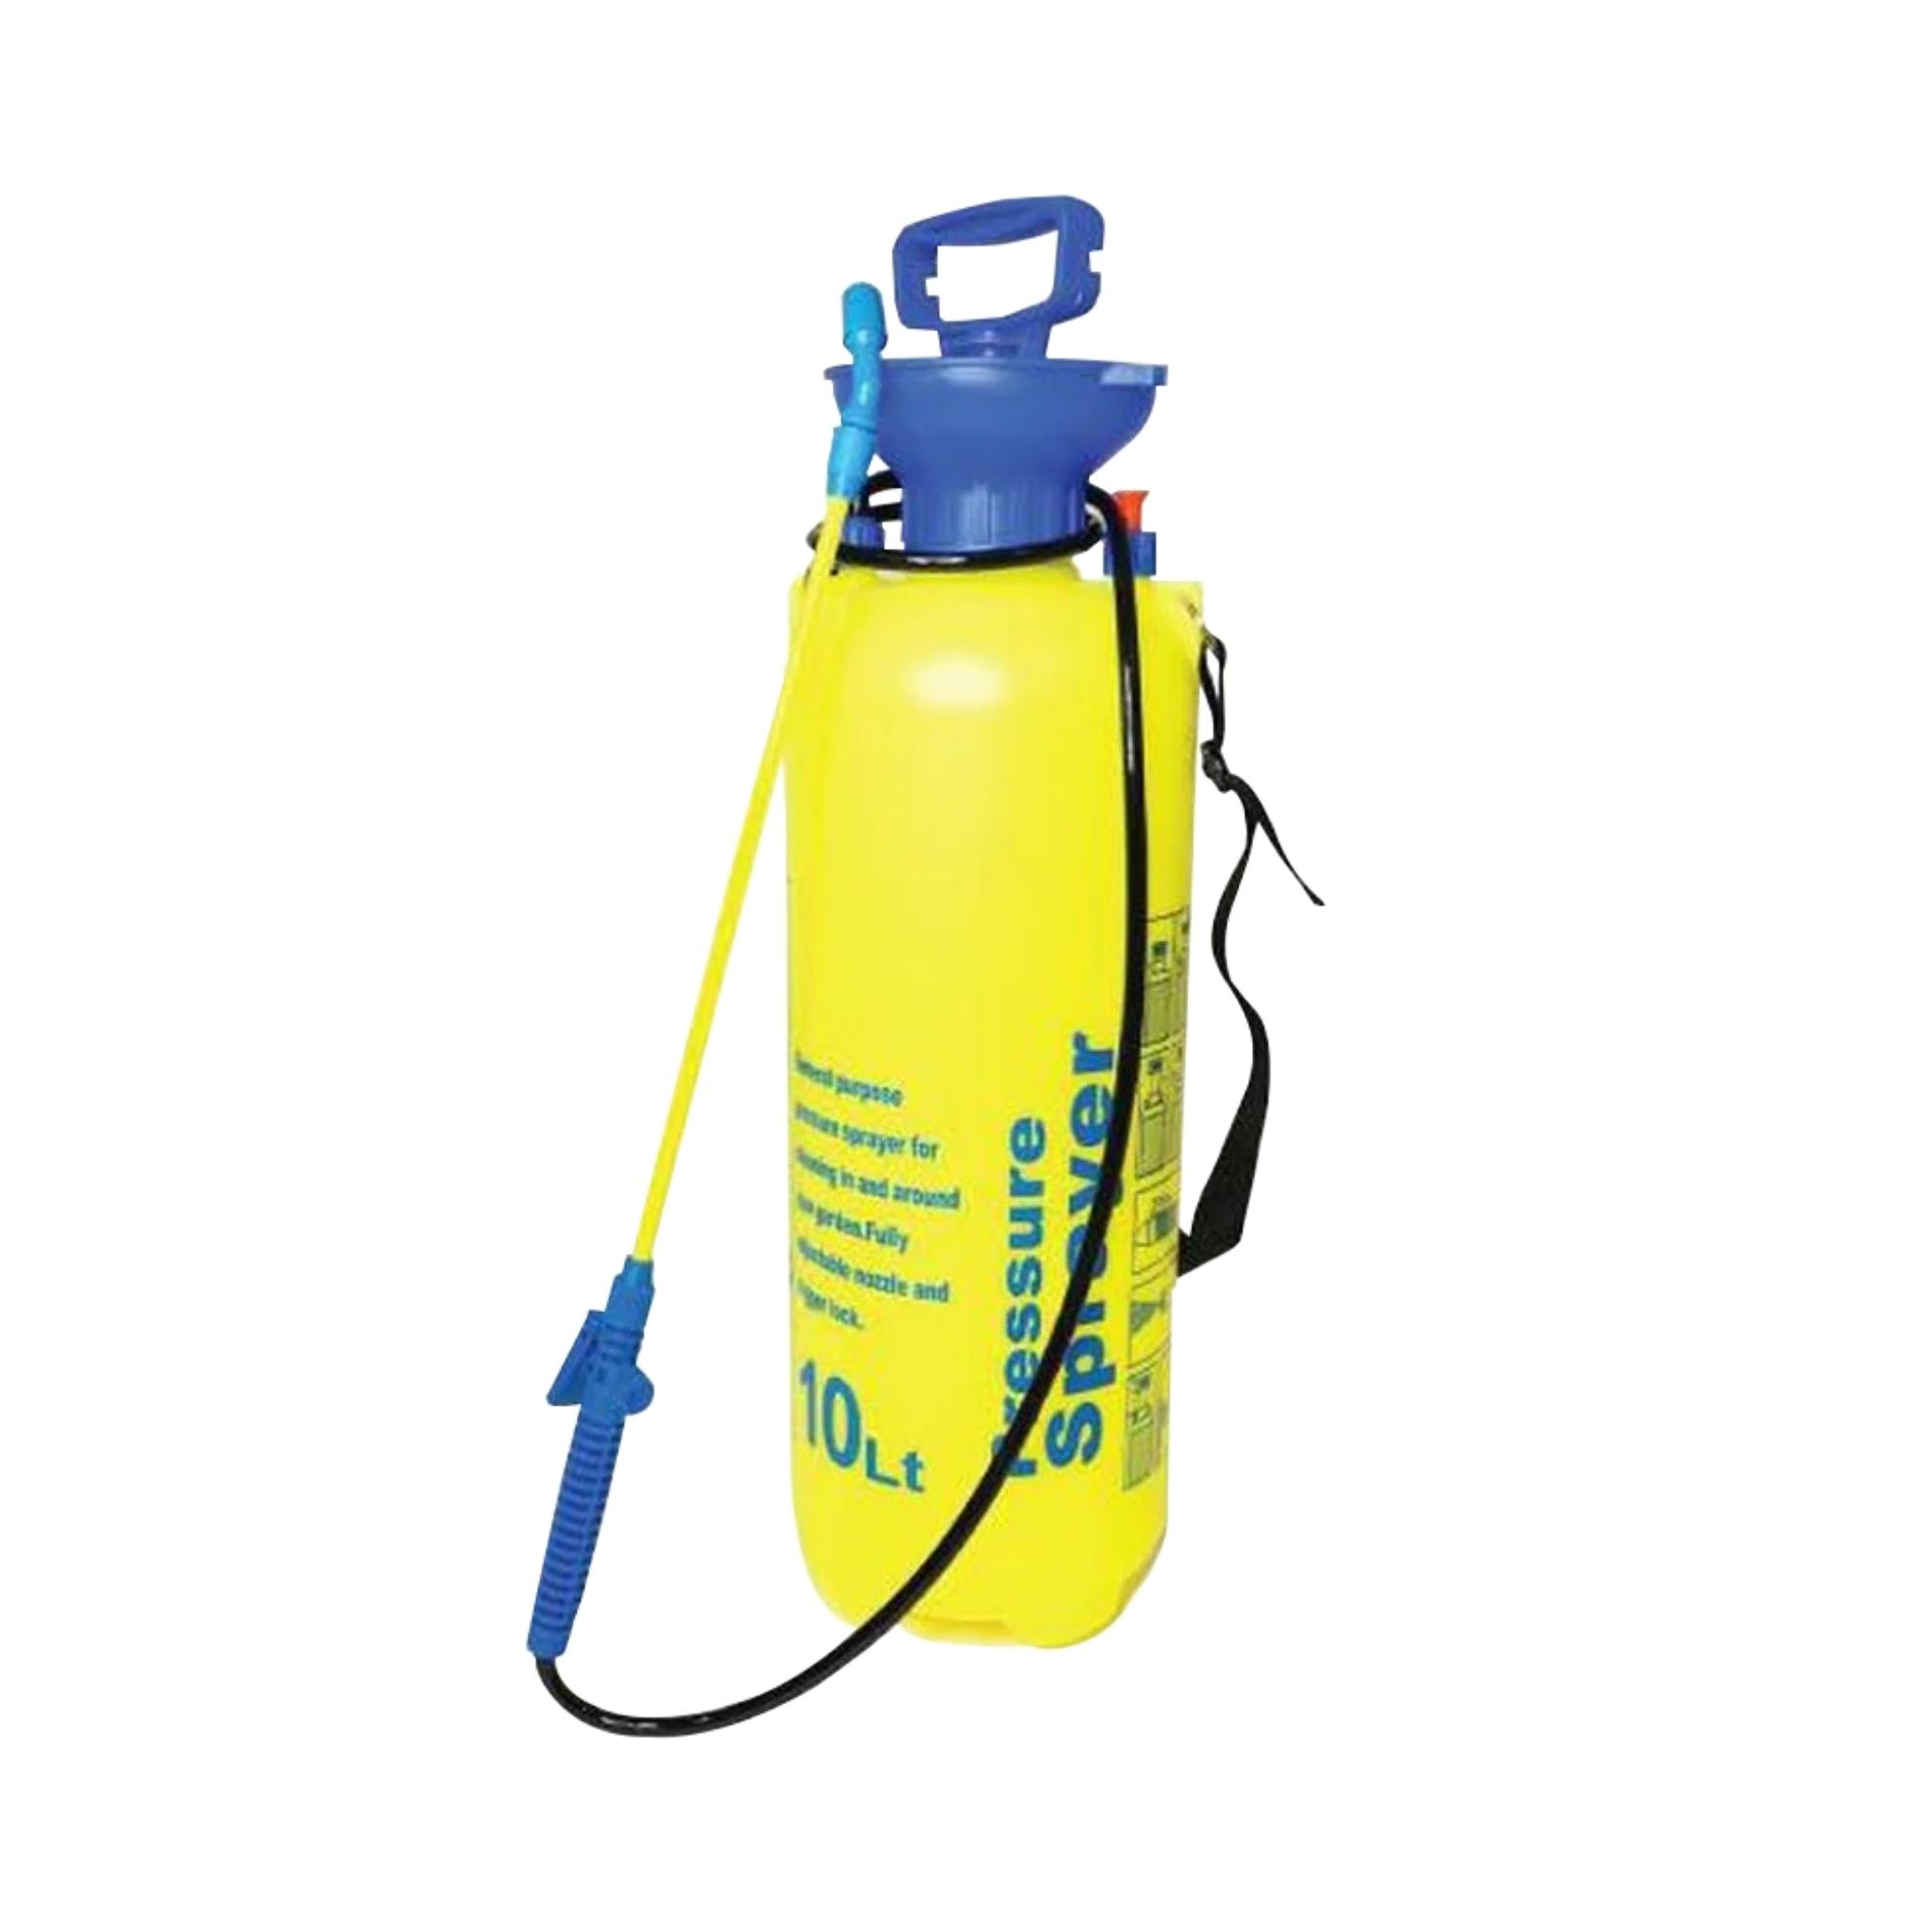 10L Pressure Sprayer | Knapsack Garden Pump for Liquids - Ideal for Yard and Plants